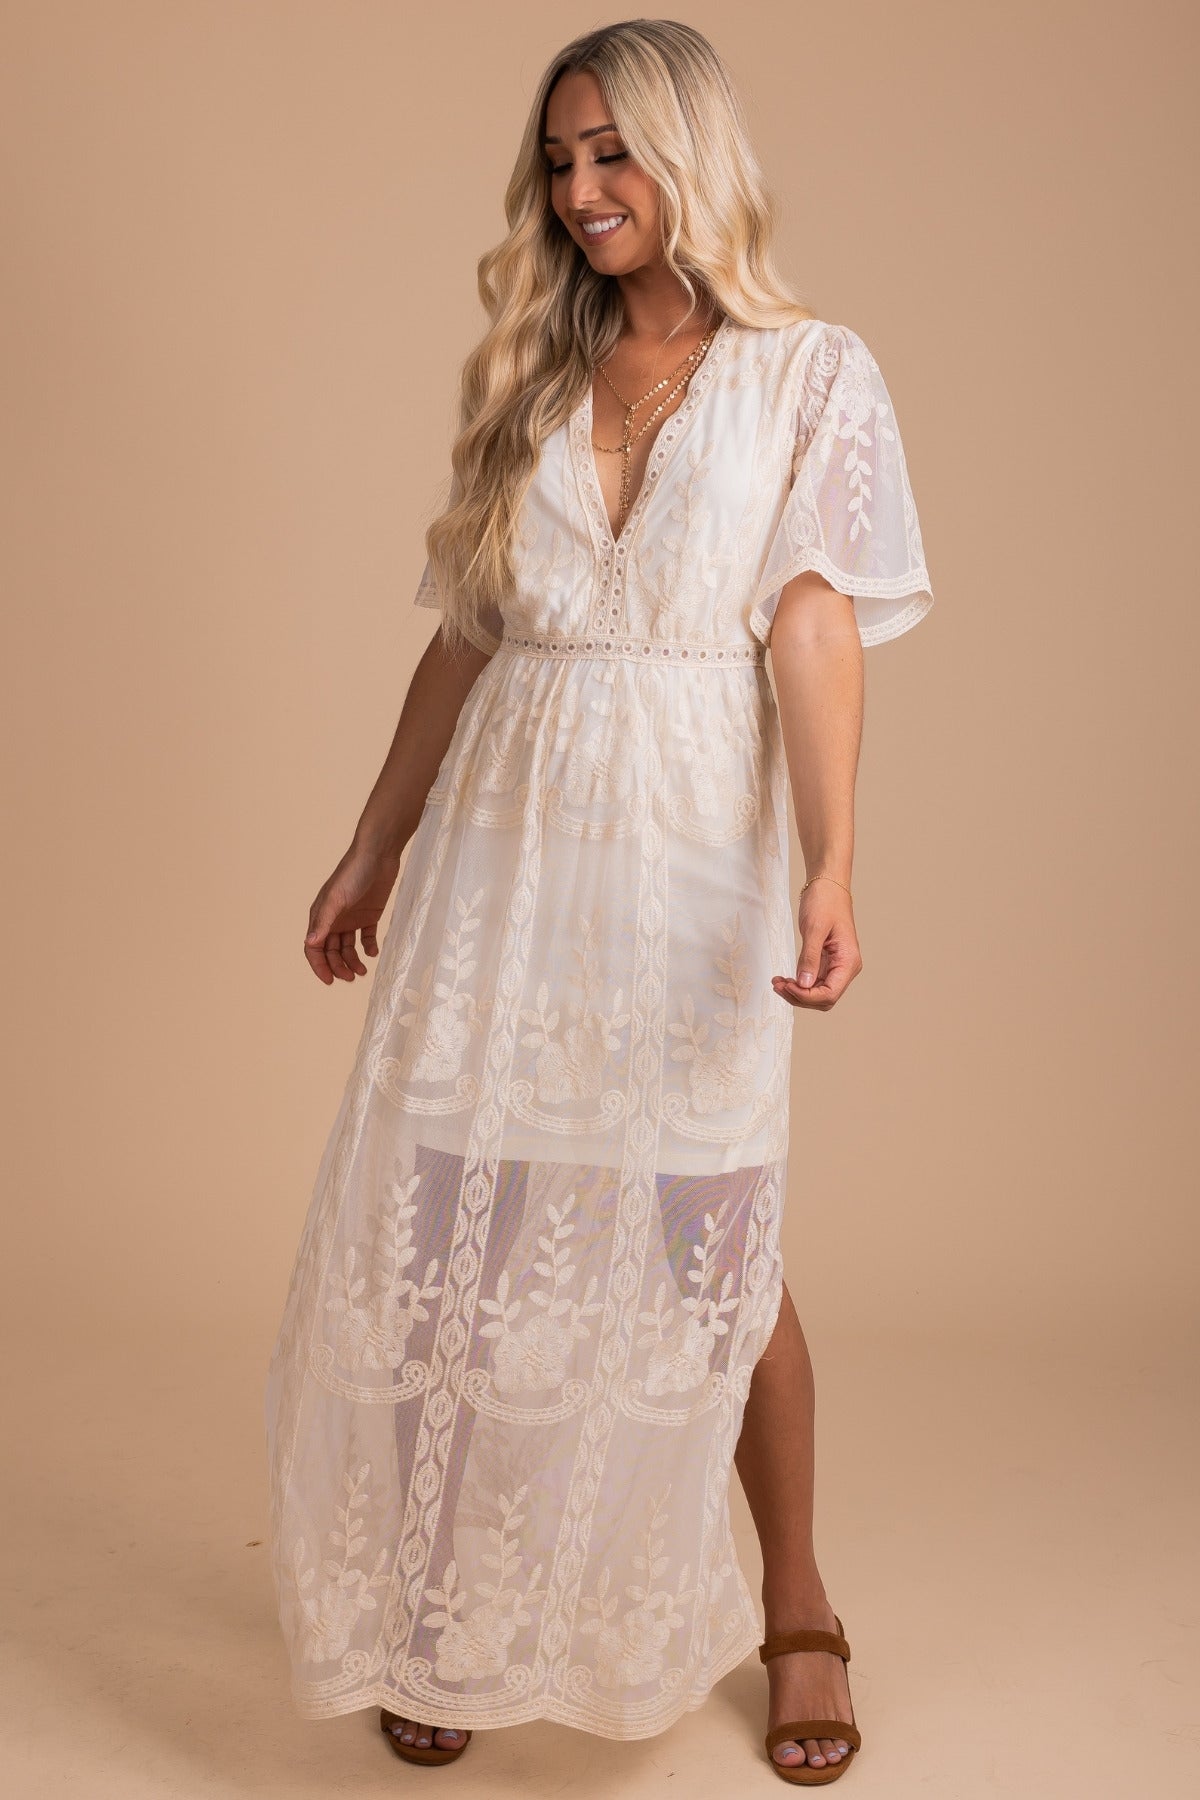 Vintage Cream Lace Peplum Gatsby Romantic Long Gown Dress S/M | eBay